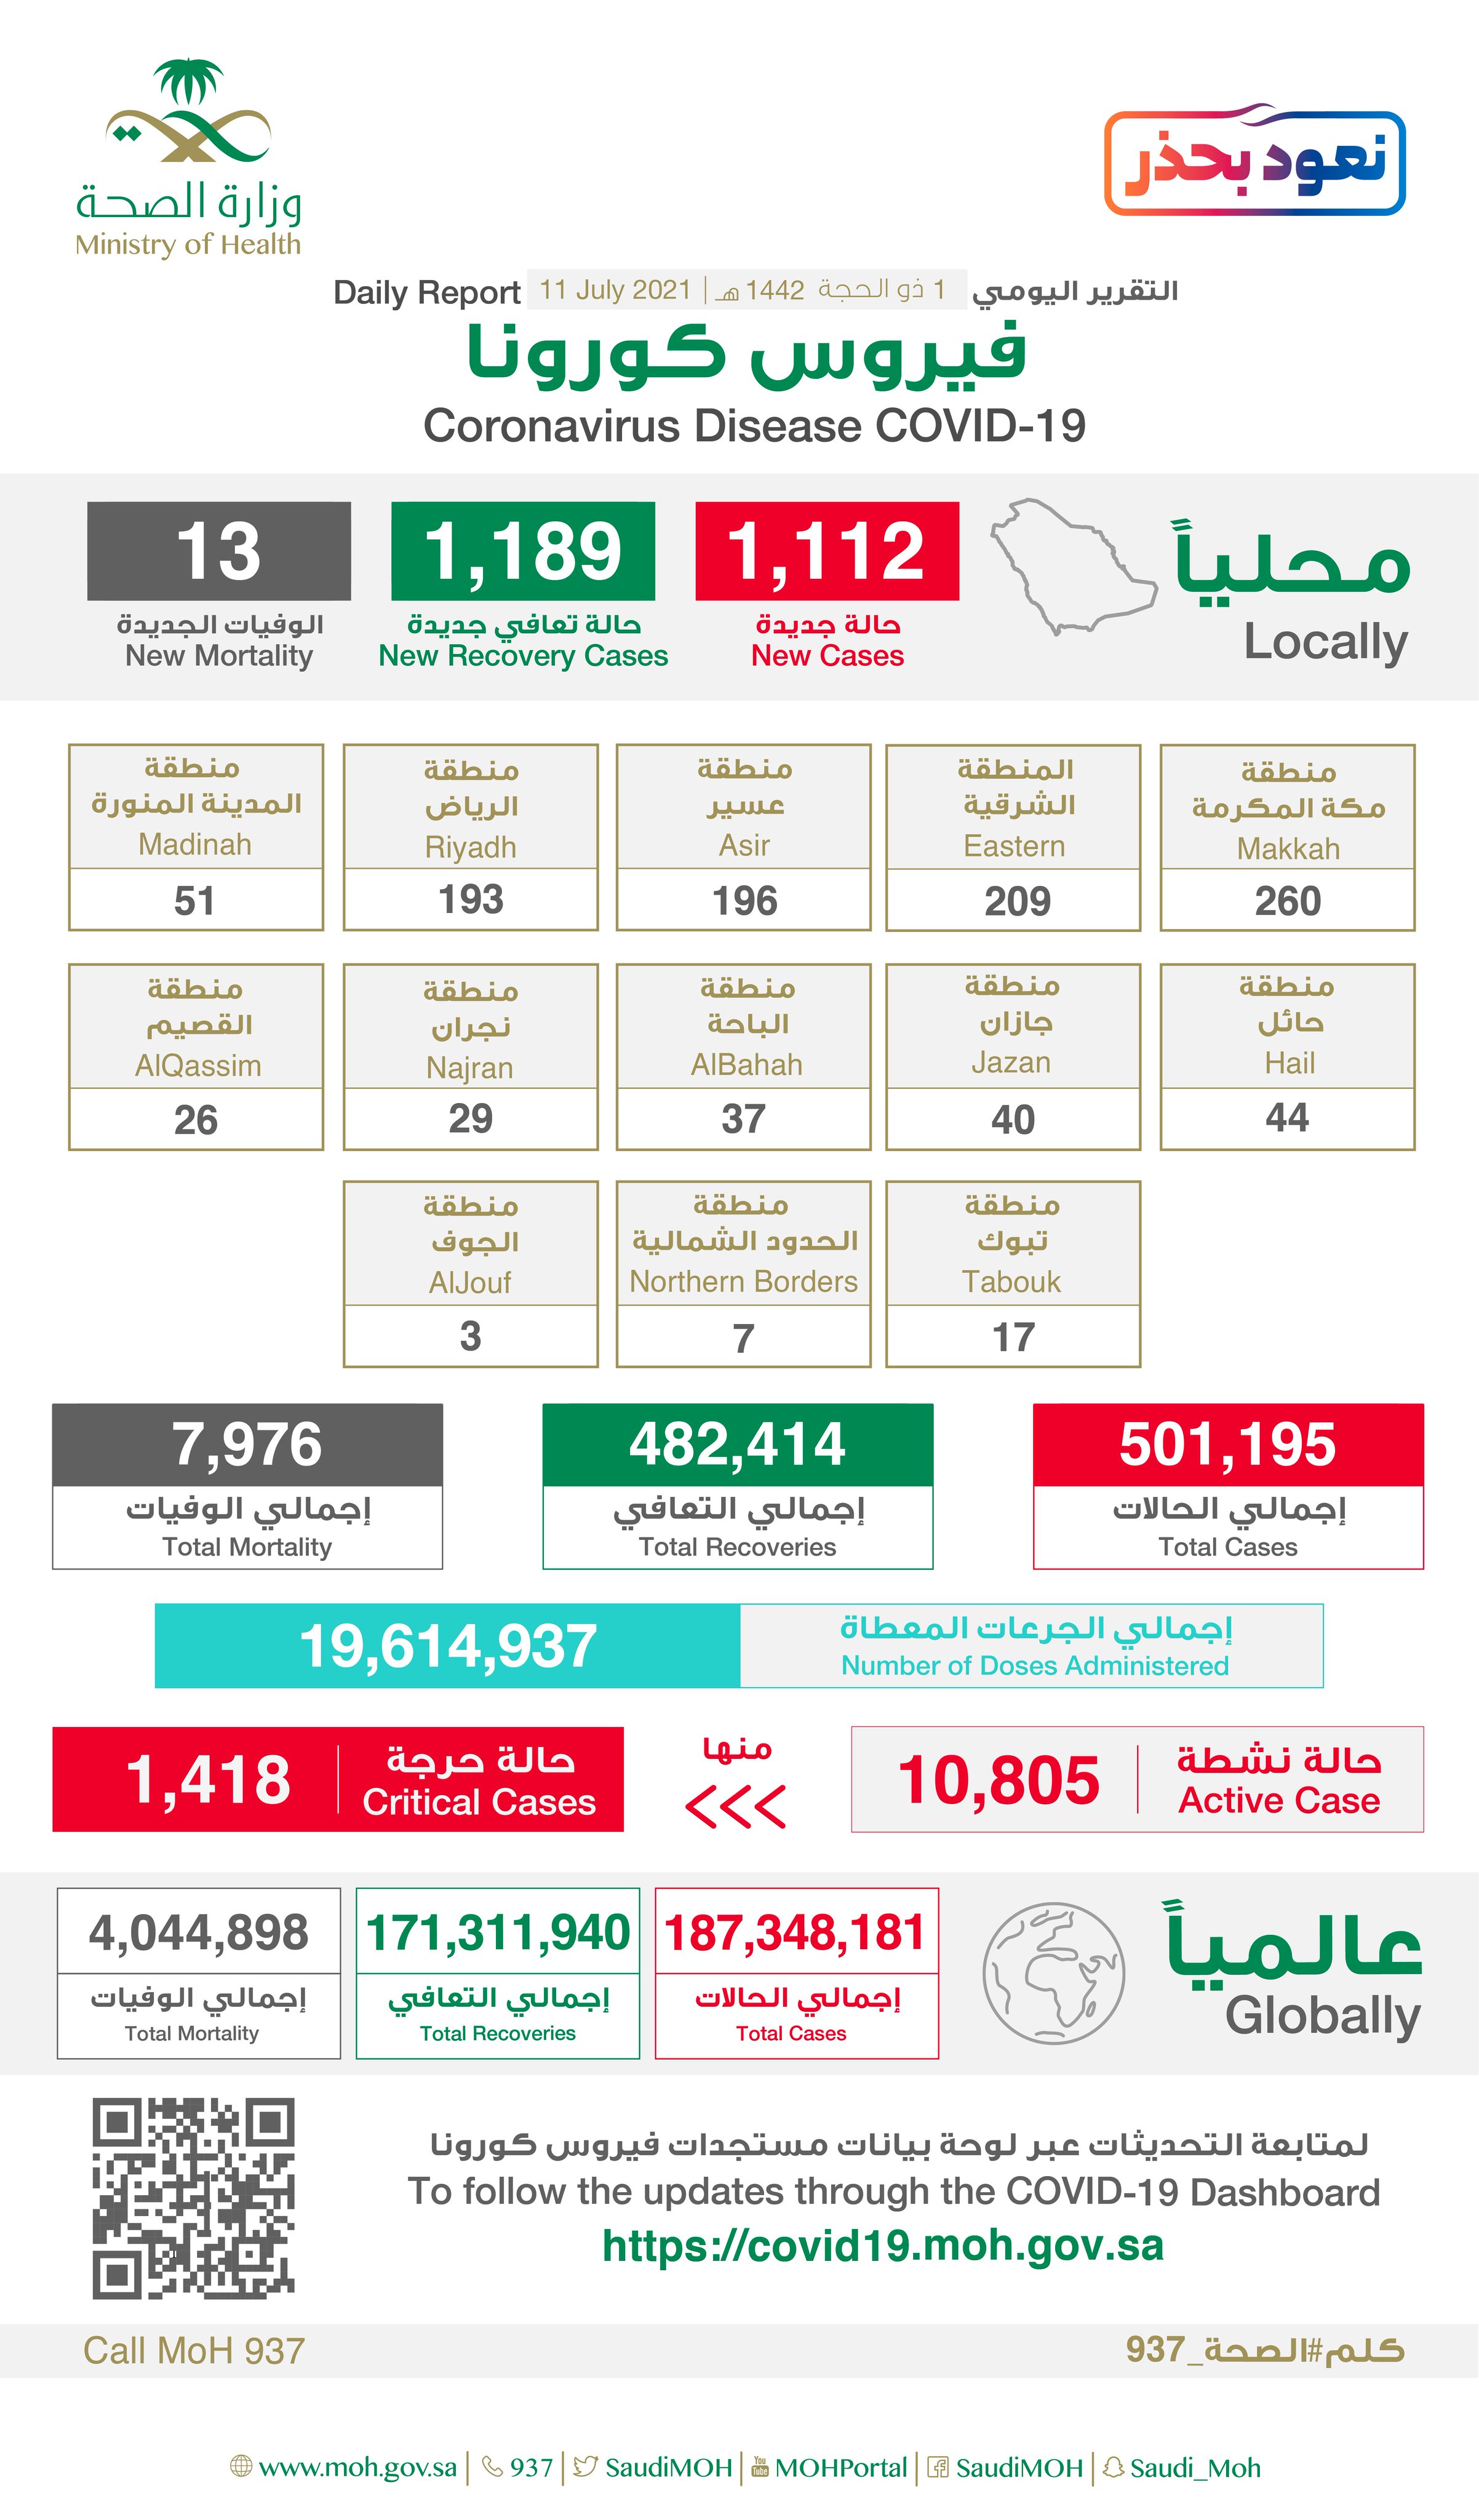 Saudi Arabia Coronavirus : Total Cases : 501,195 , New Cases :1,112, Cured : 482,414 , Deaths: 7,976, Active Cases : 10,805